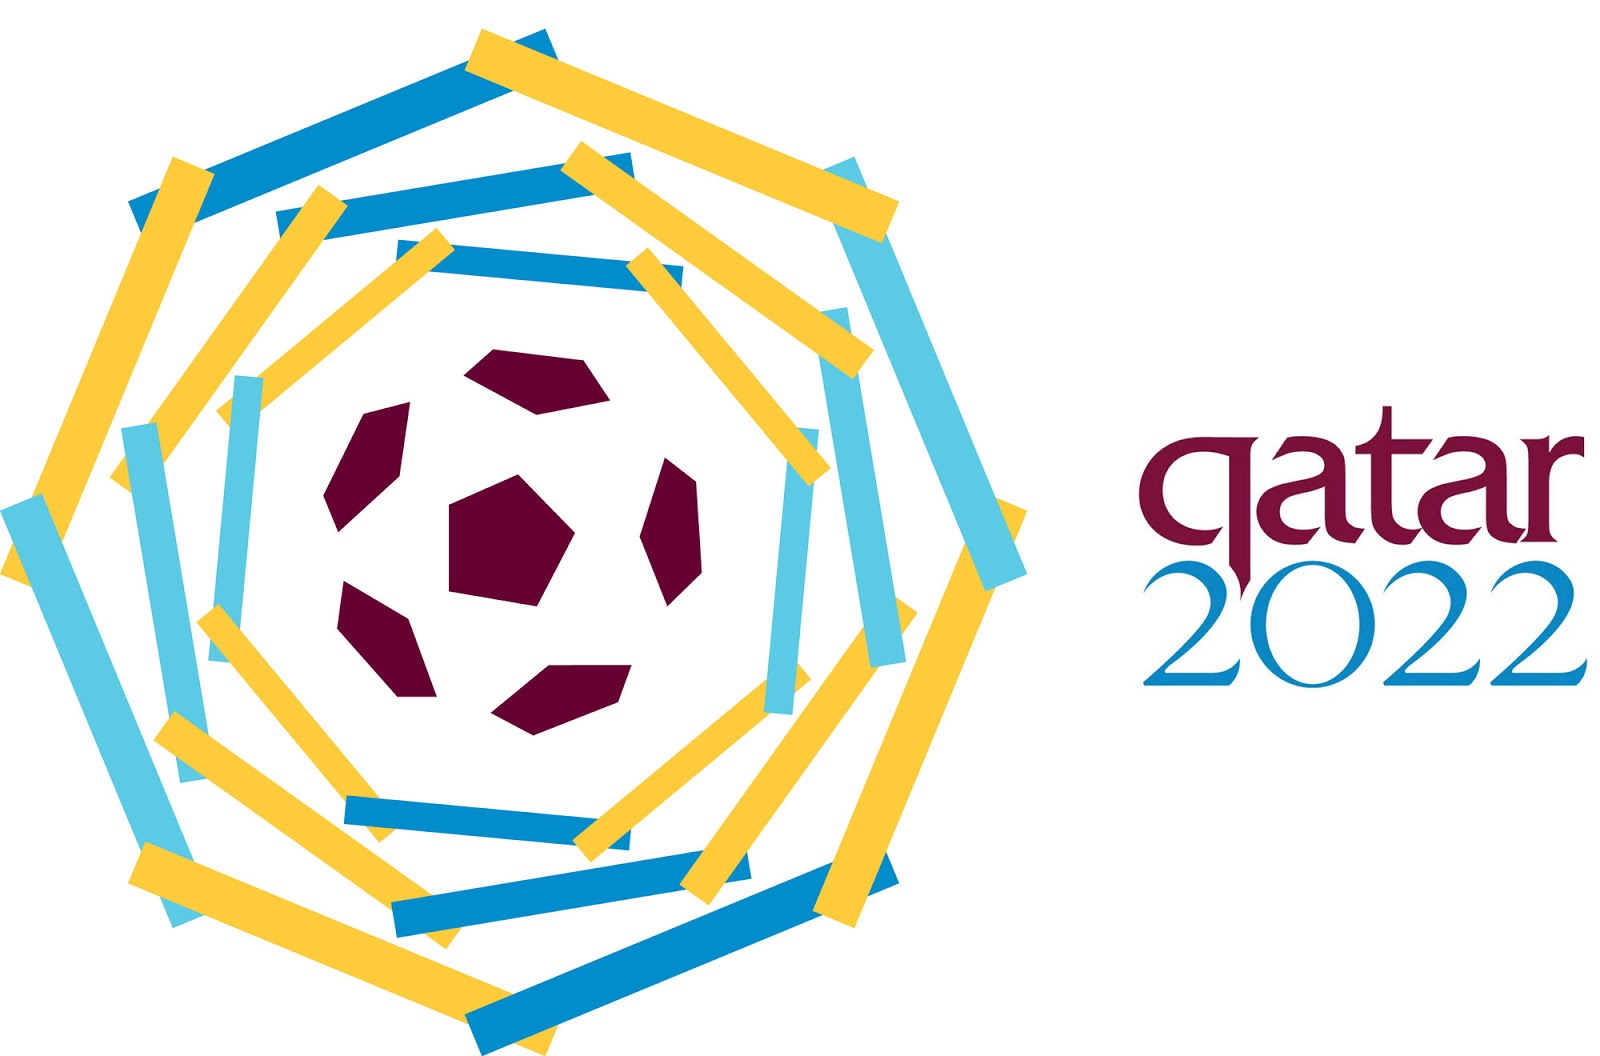 2022 Qatar Fifa World Cup Logo Concepts Official Qatar 2022 Logo To